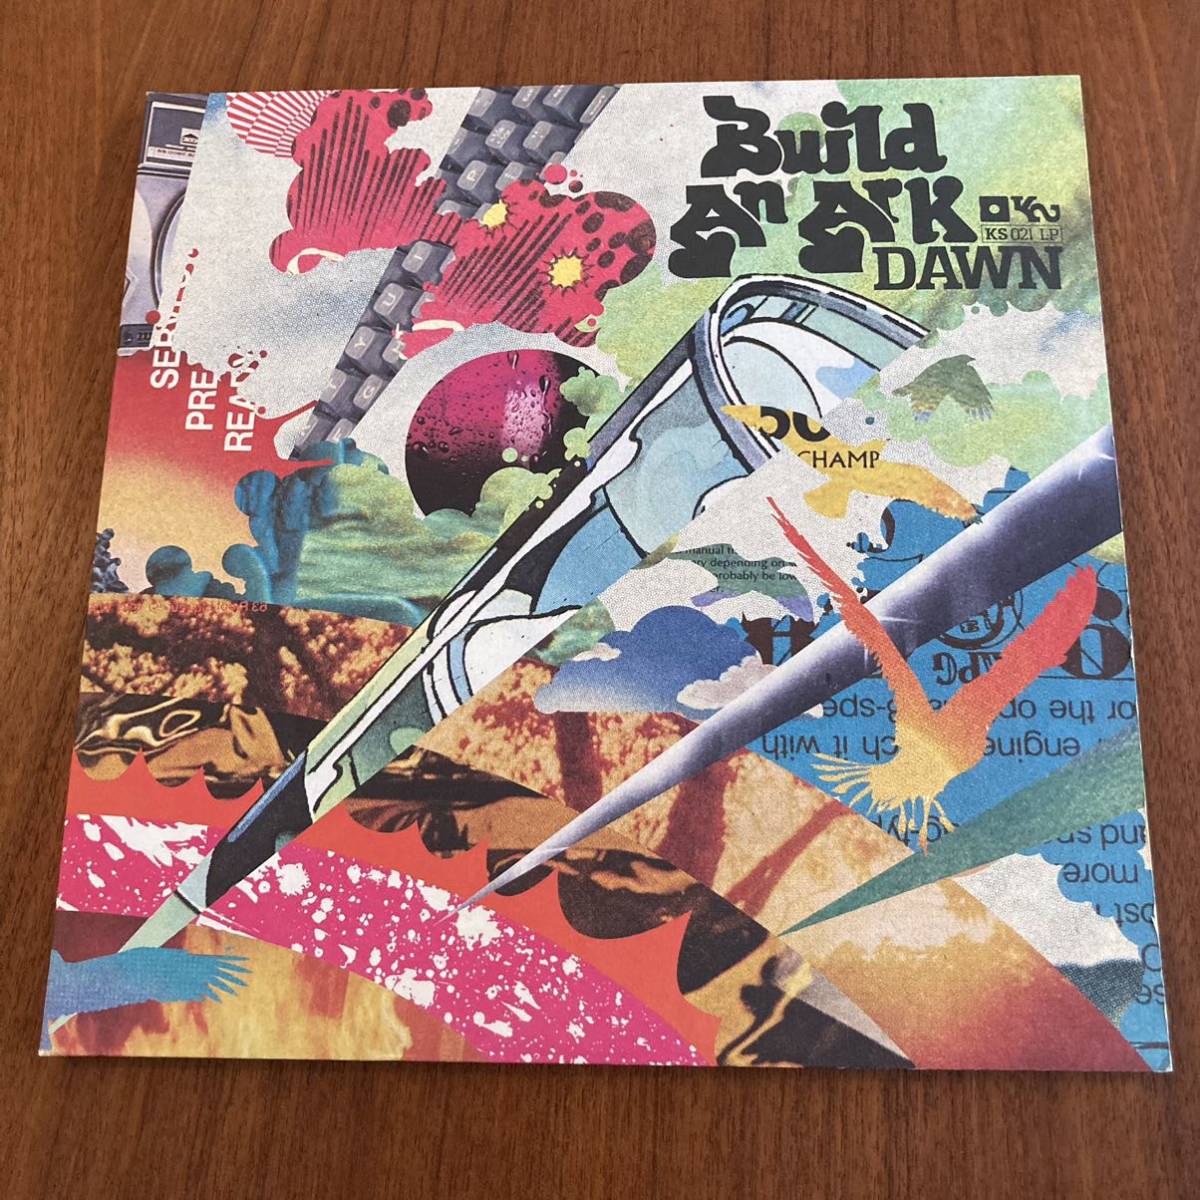 BUILD AN ARK ビルド・アン・アーク / DAWN (2LP) レコード